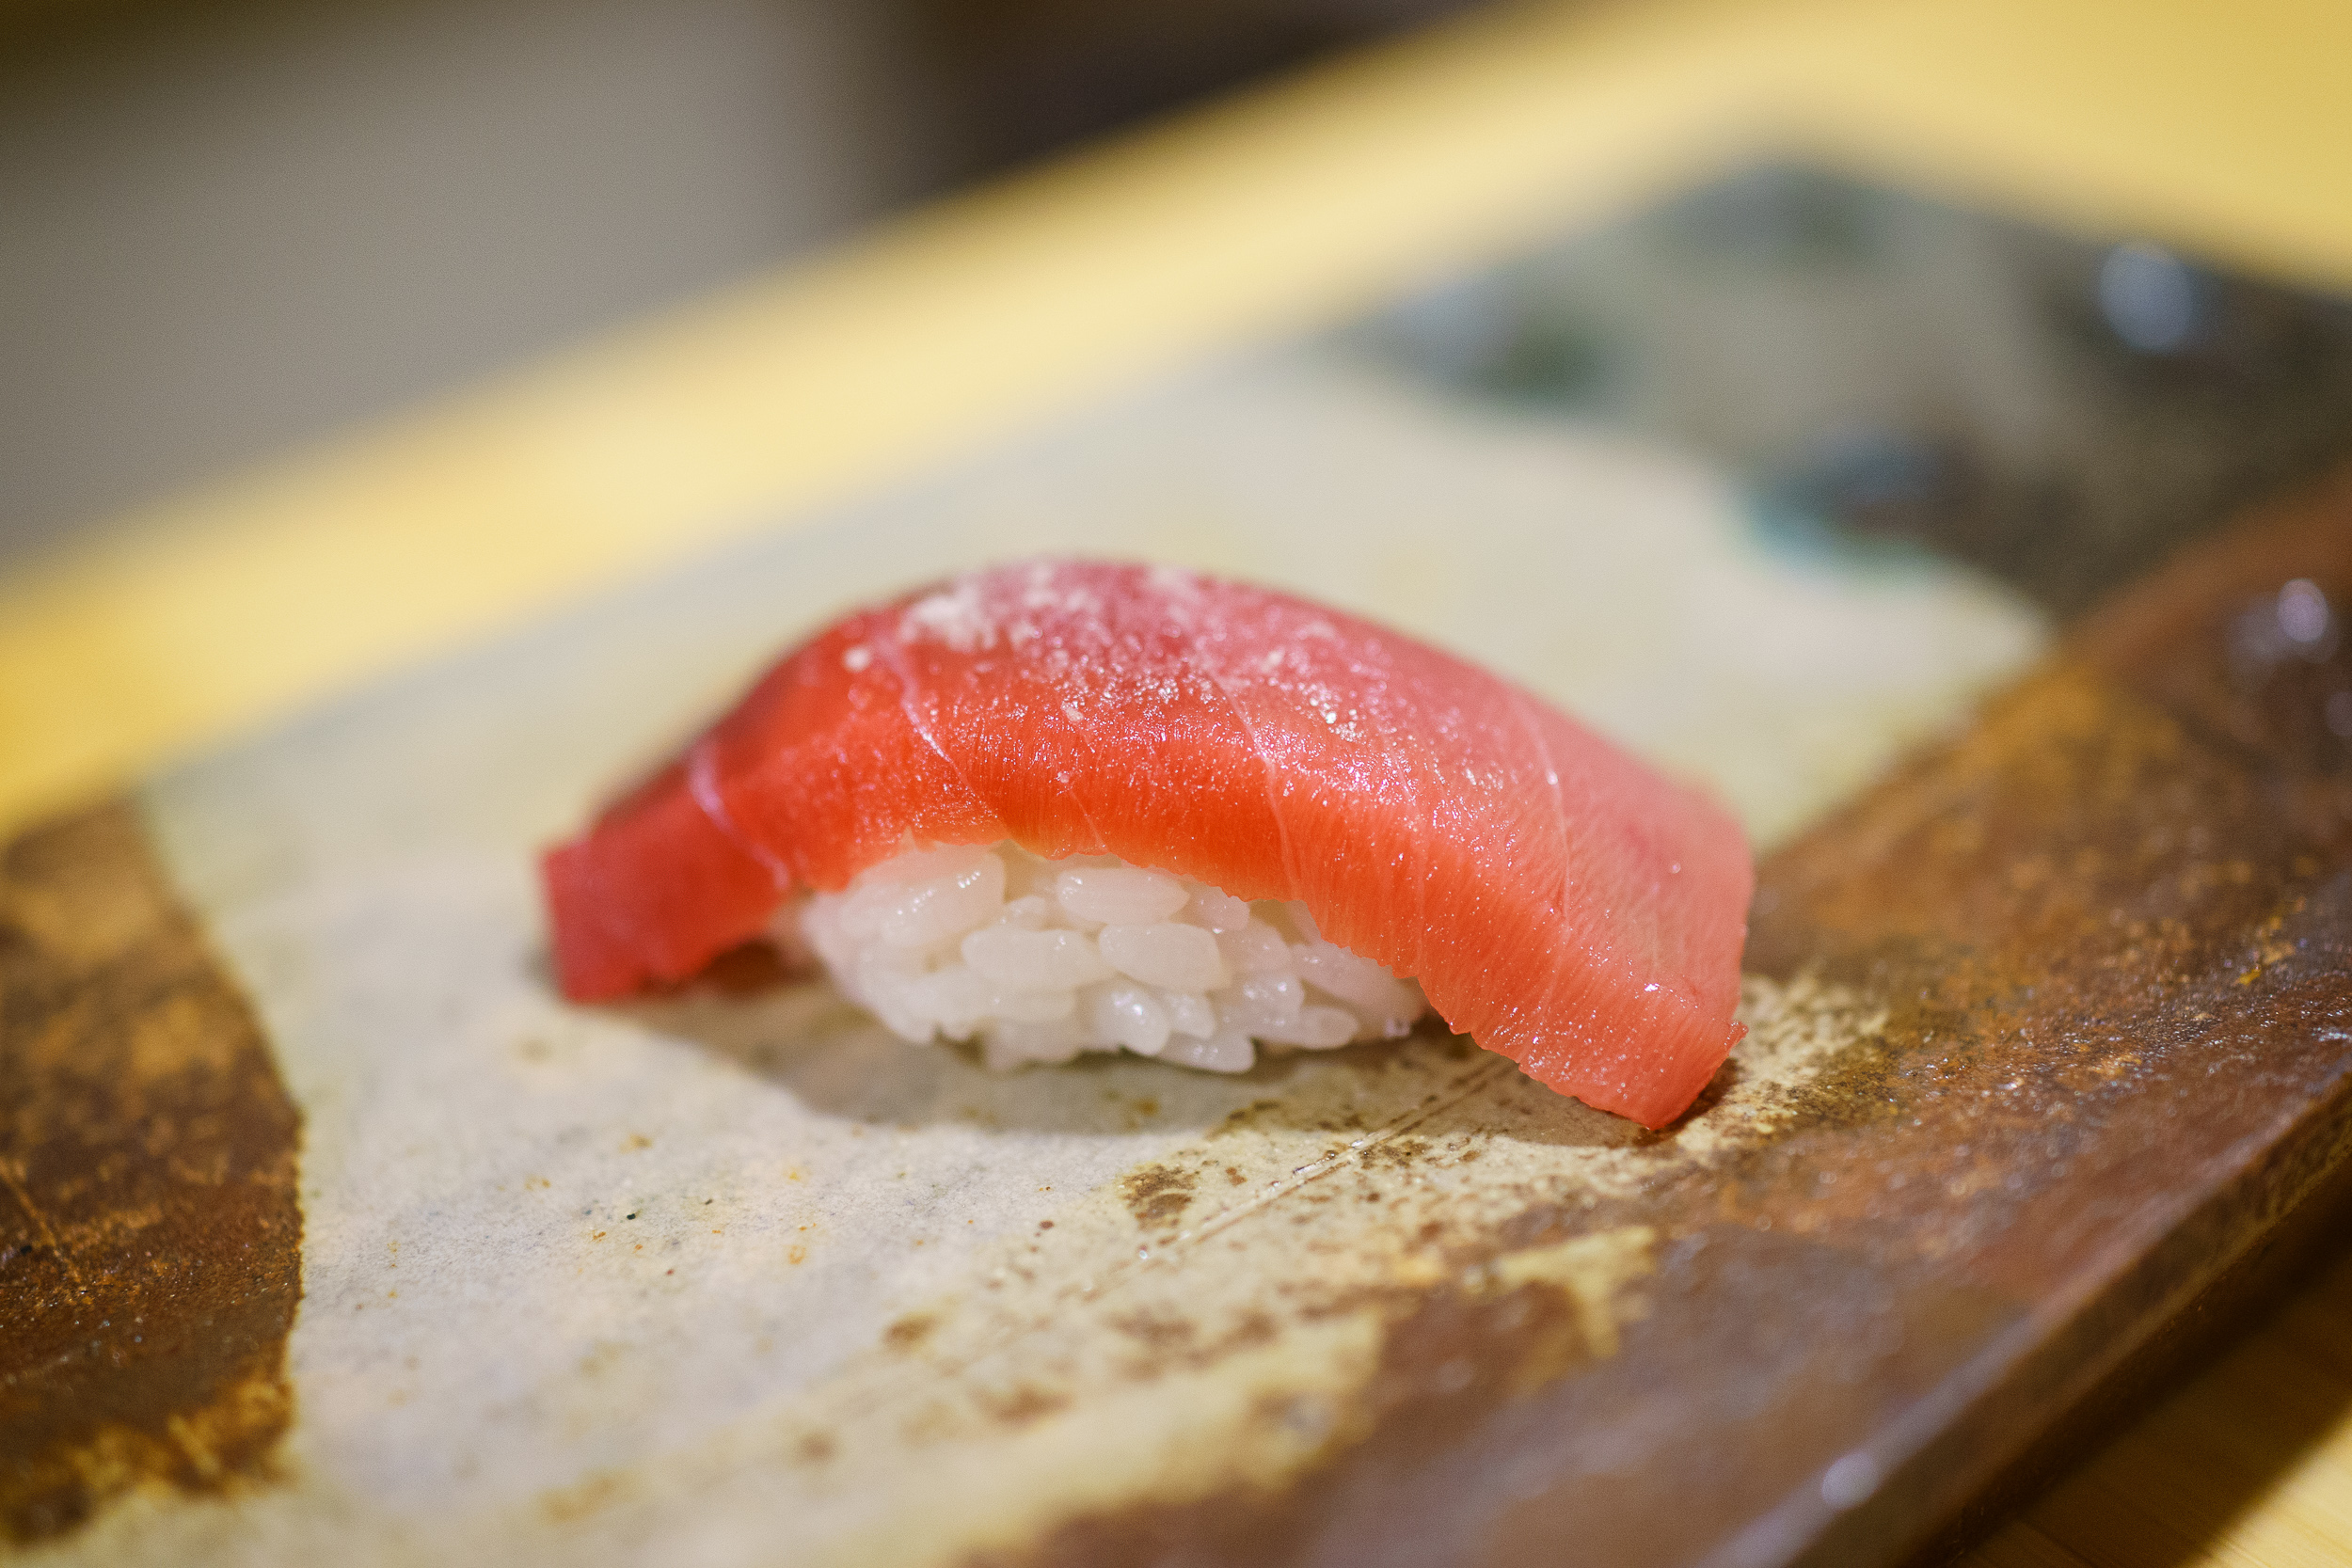 5th Course: Medium fatty tuna